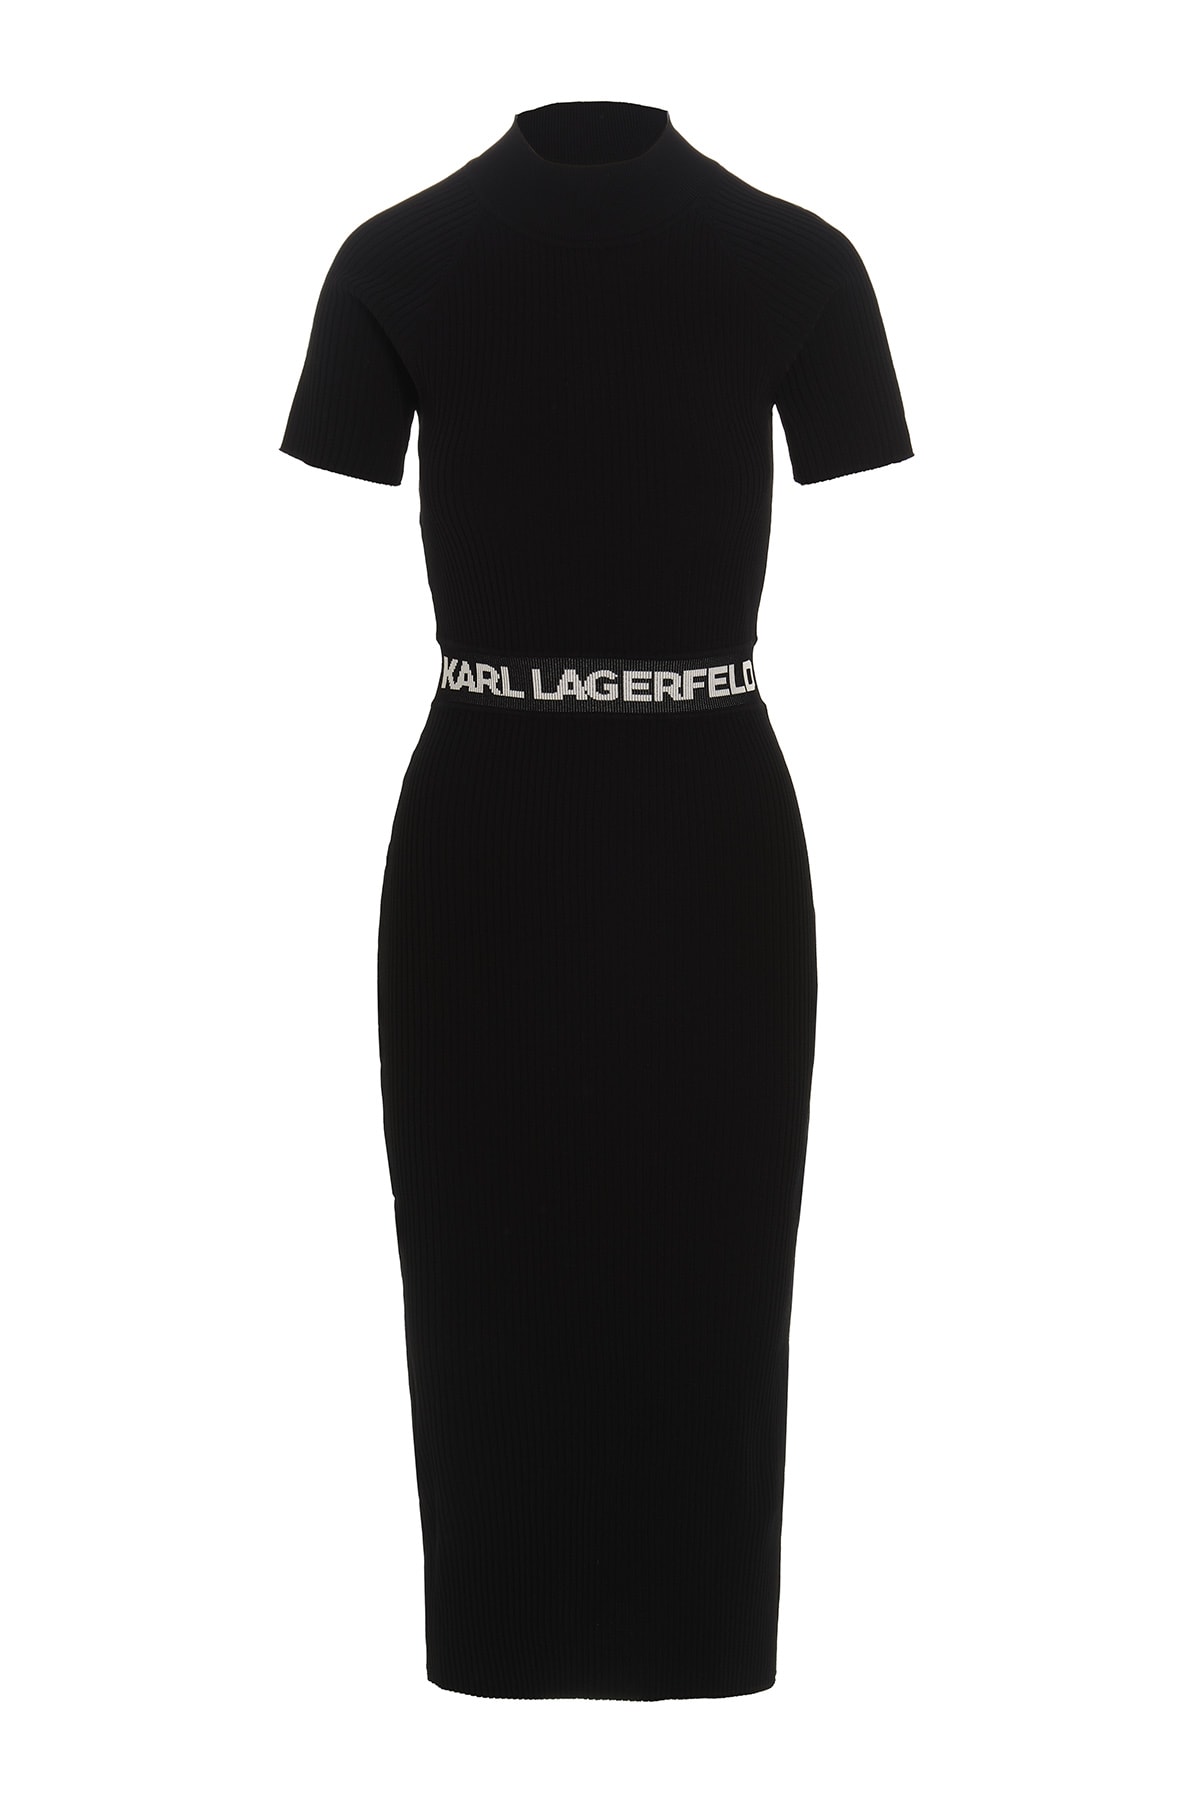 Karl Lagerfeld Logo Dress